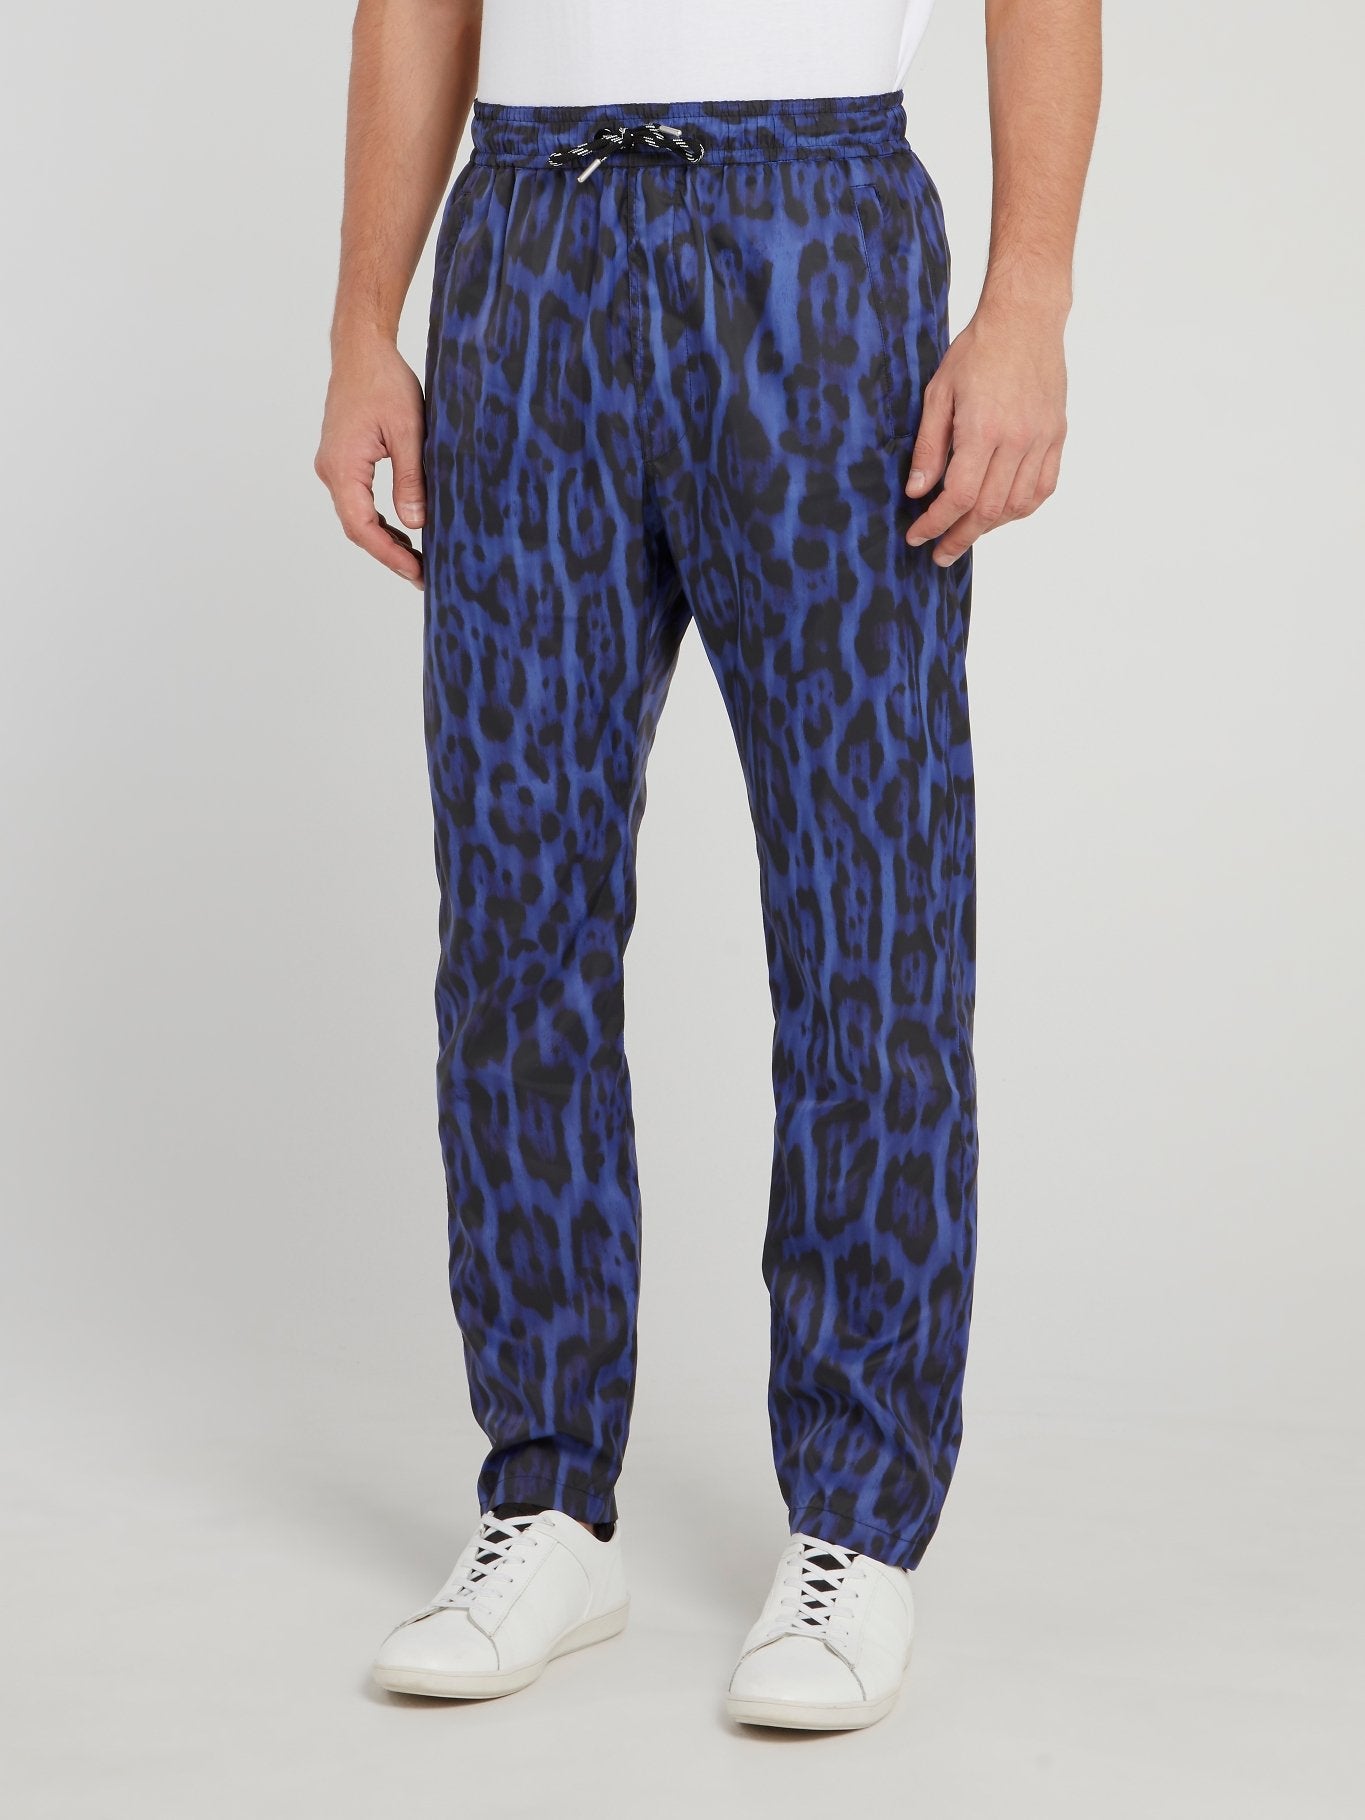 Blue Leopard Print Trousers